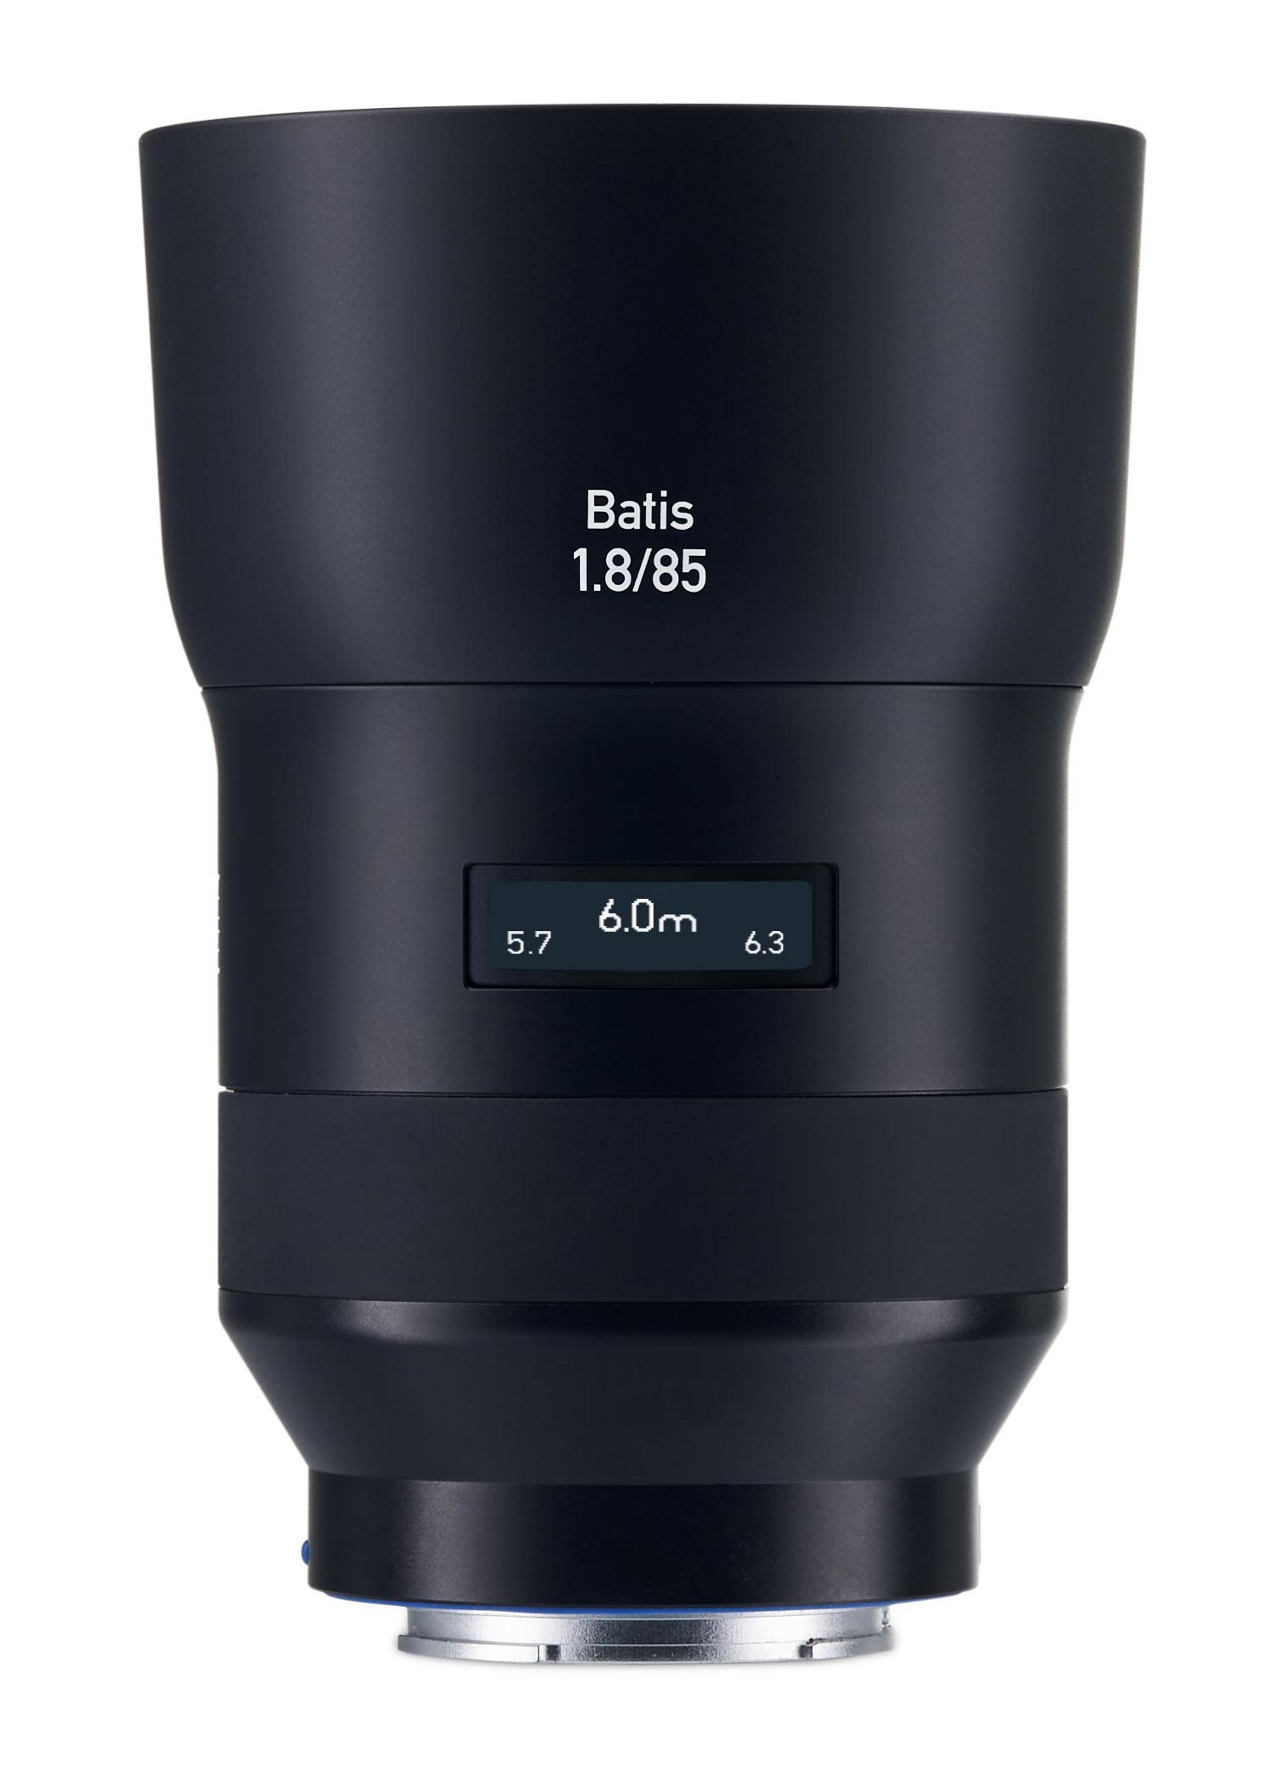 ZEISS Batis 1.8/85 | Sony αシリーズ用フルサイズオートフォーカスレンズ